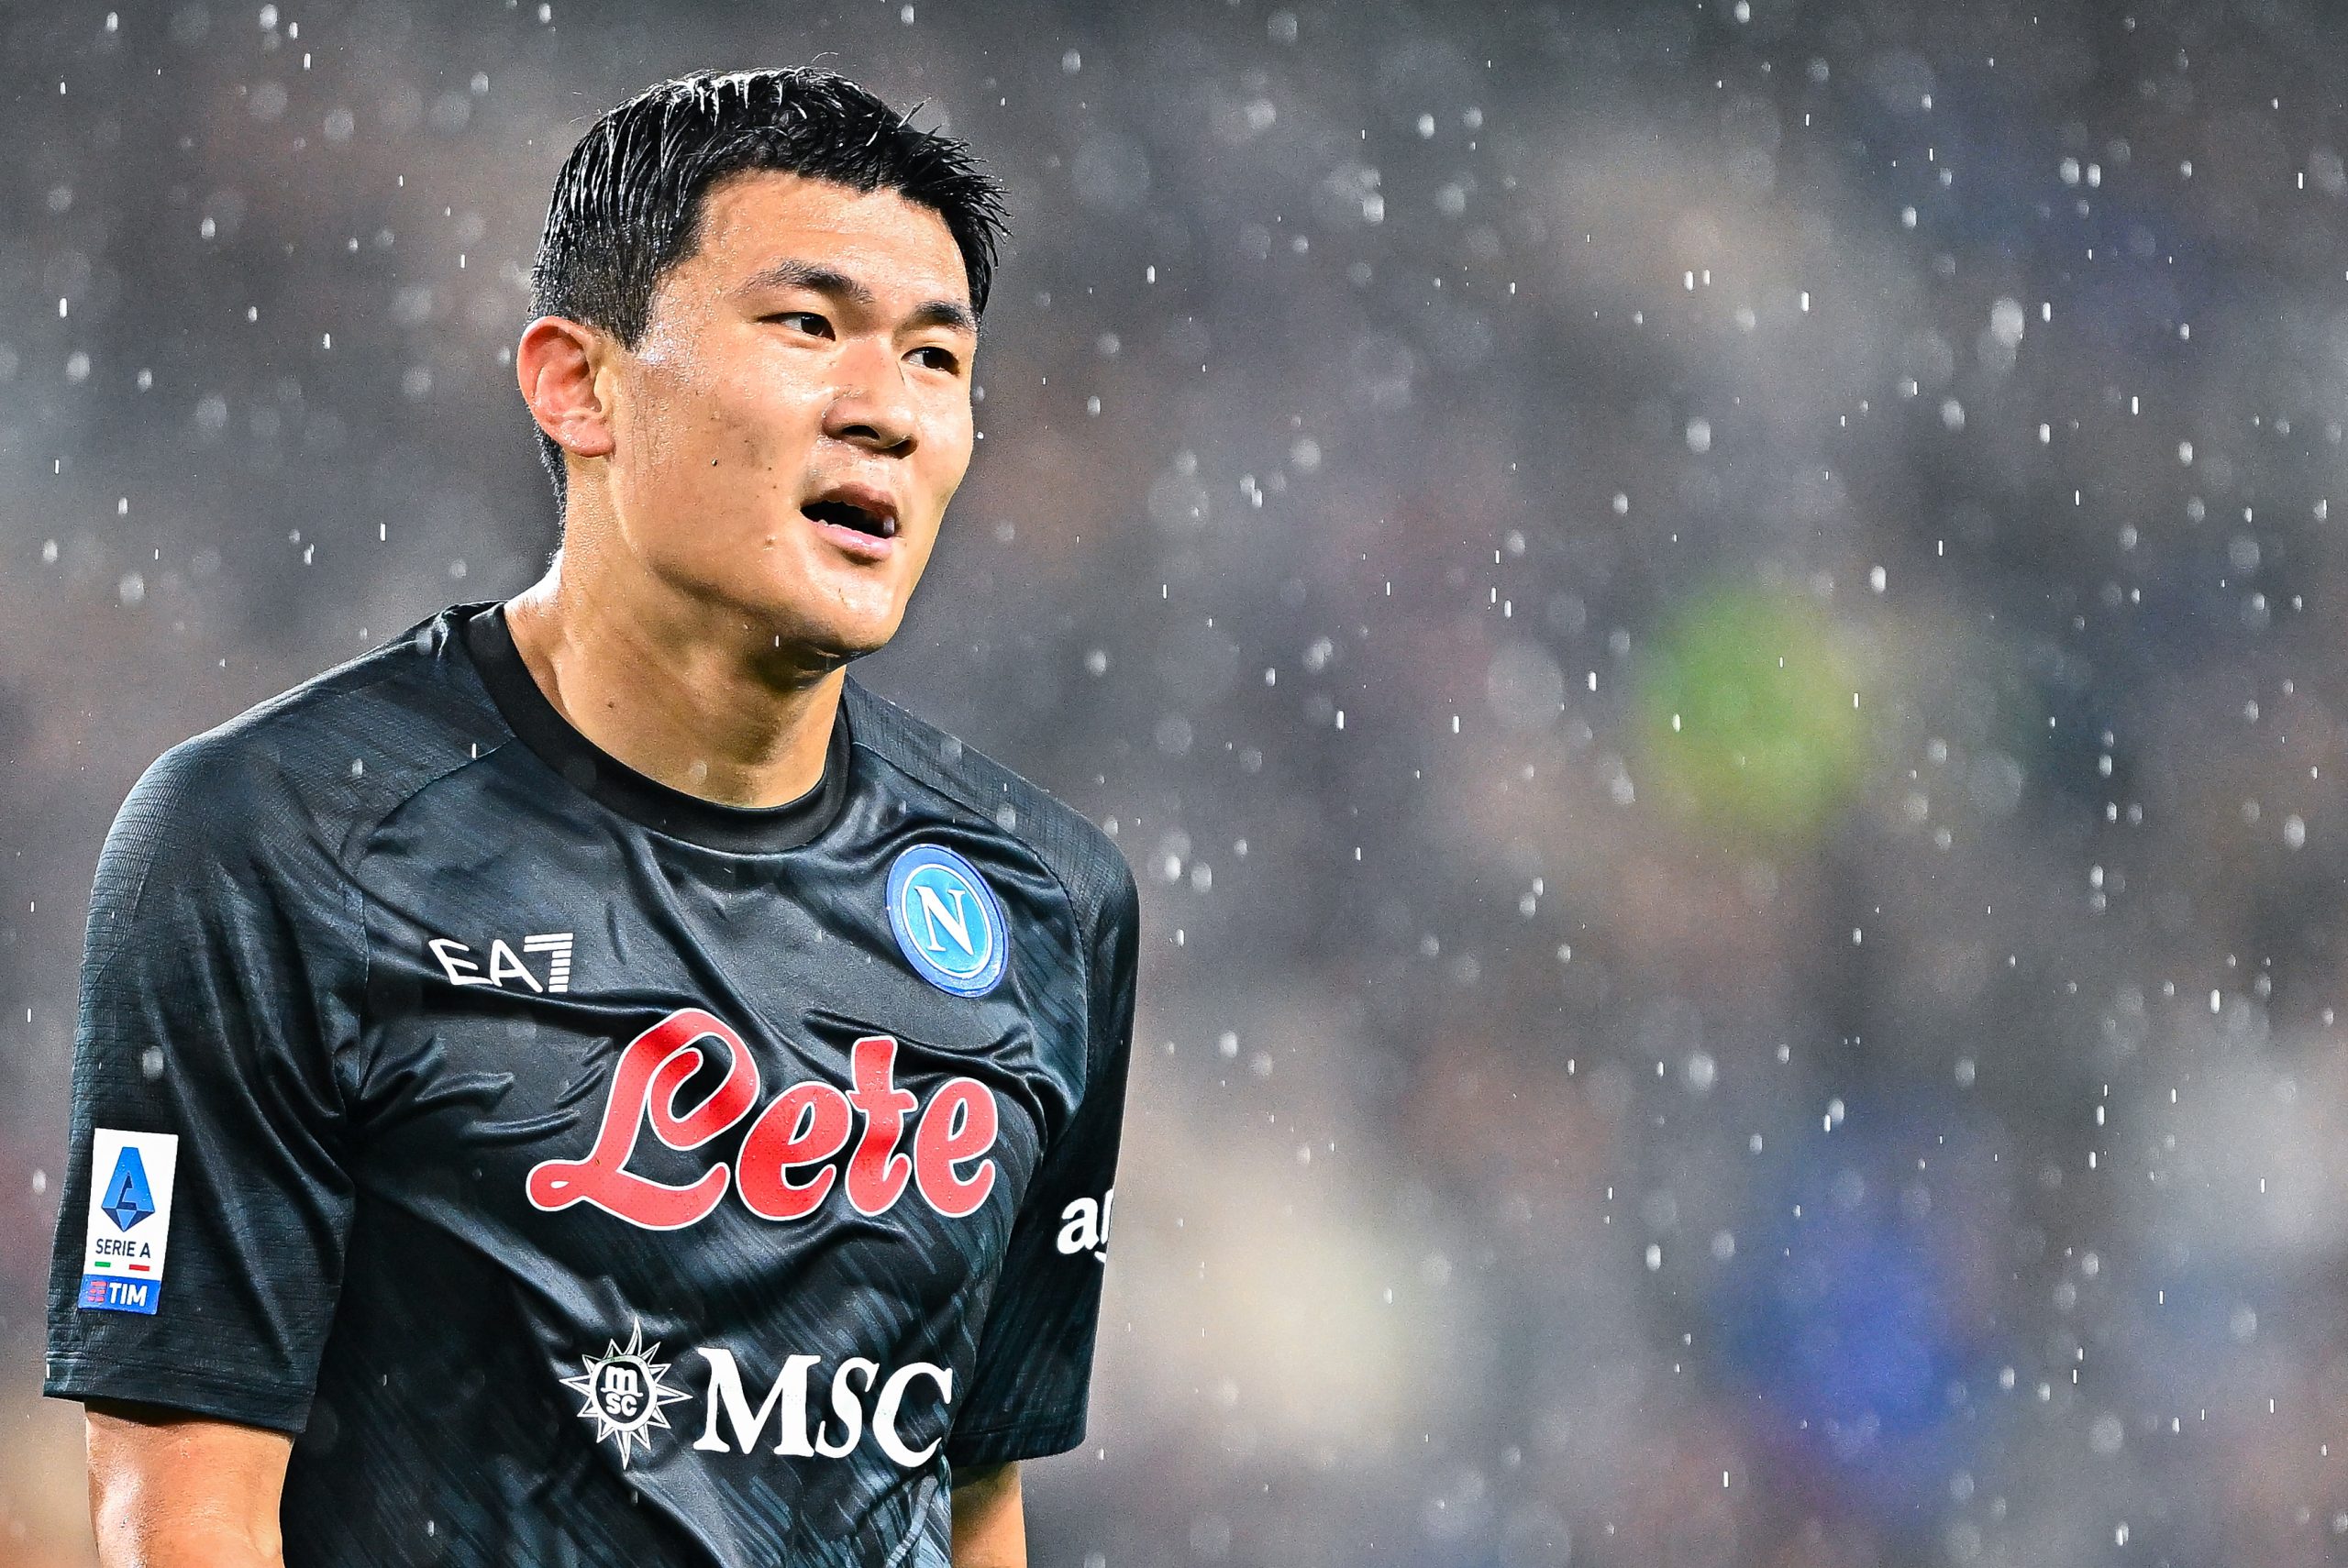 Tottenham Hotspur hold Son Heung-min 'advantage' in Napoli defender Kim Min-jae race.